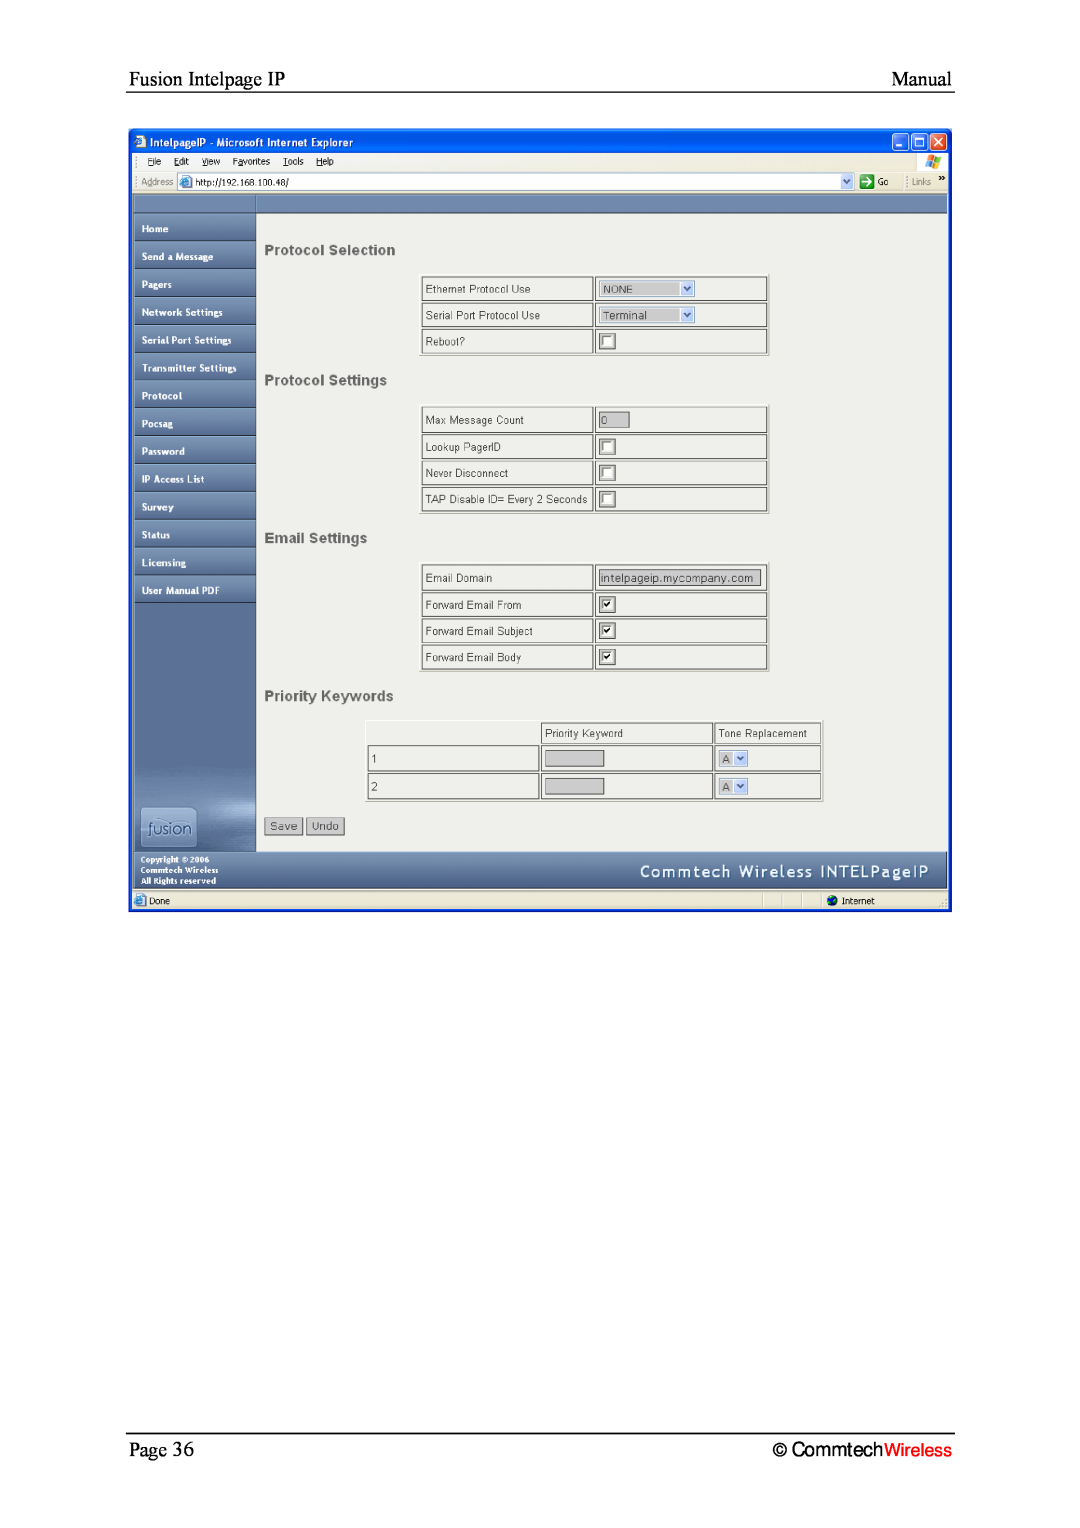 Fusion 2.1, INTELPage IP 5 manual Fusion Intelpage IP, Manual, CommtechWireless 